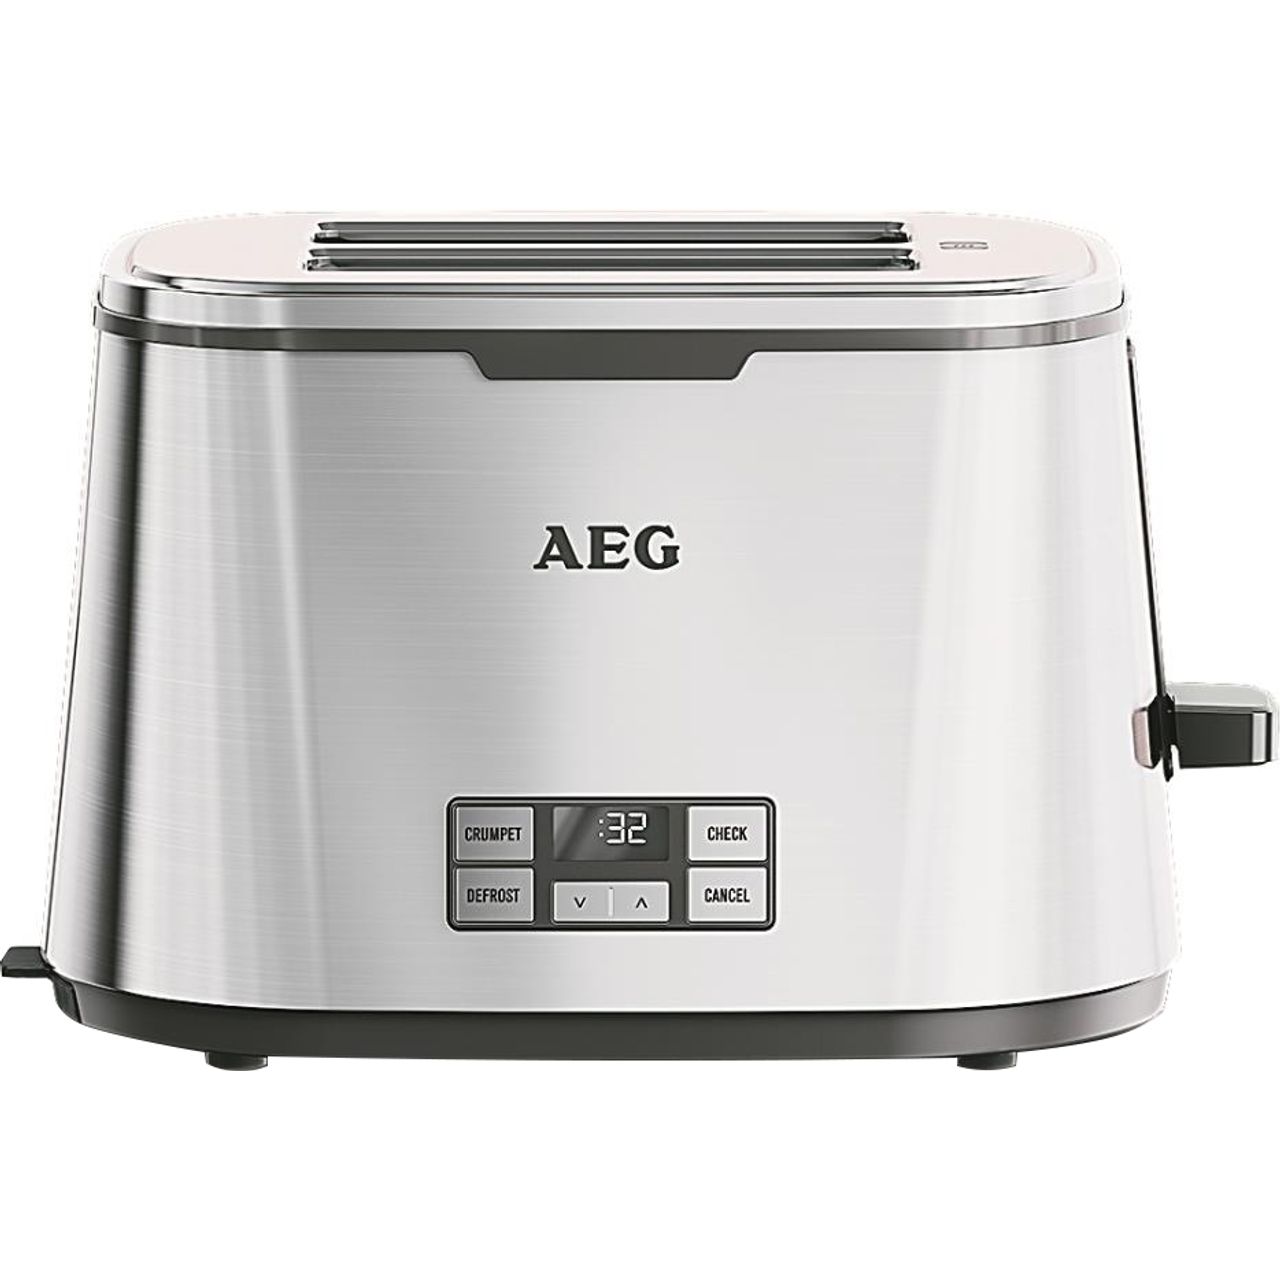 AEG 7 Series 2 Slot Digital AT7800-U 2 Slice Toaster Review